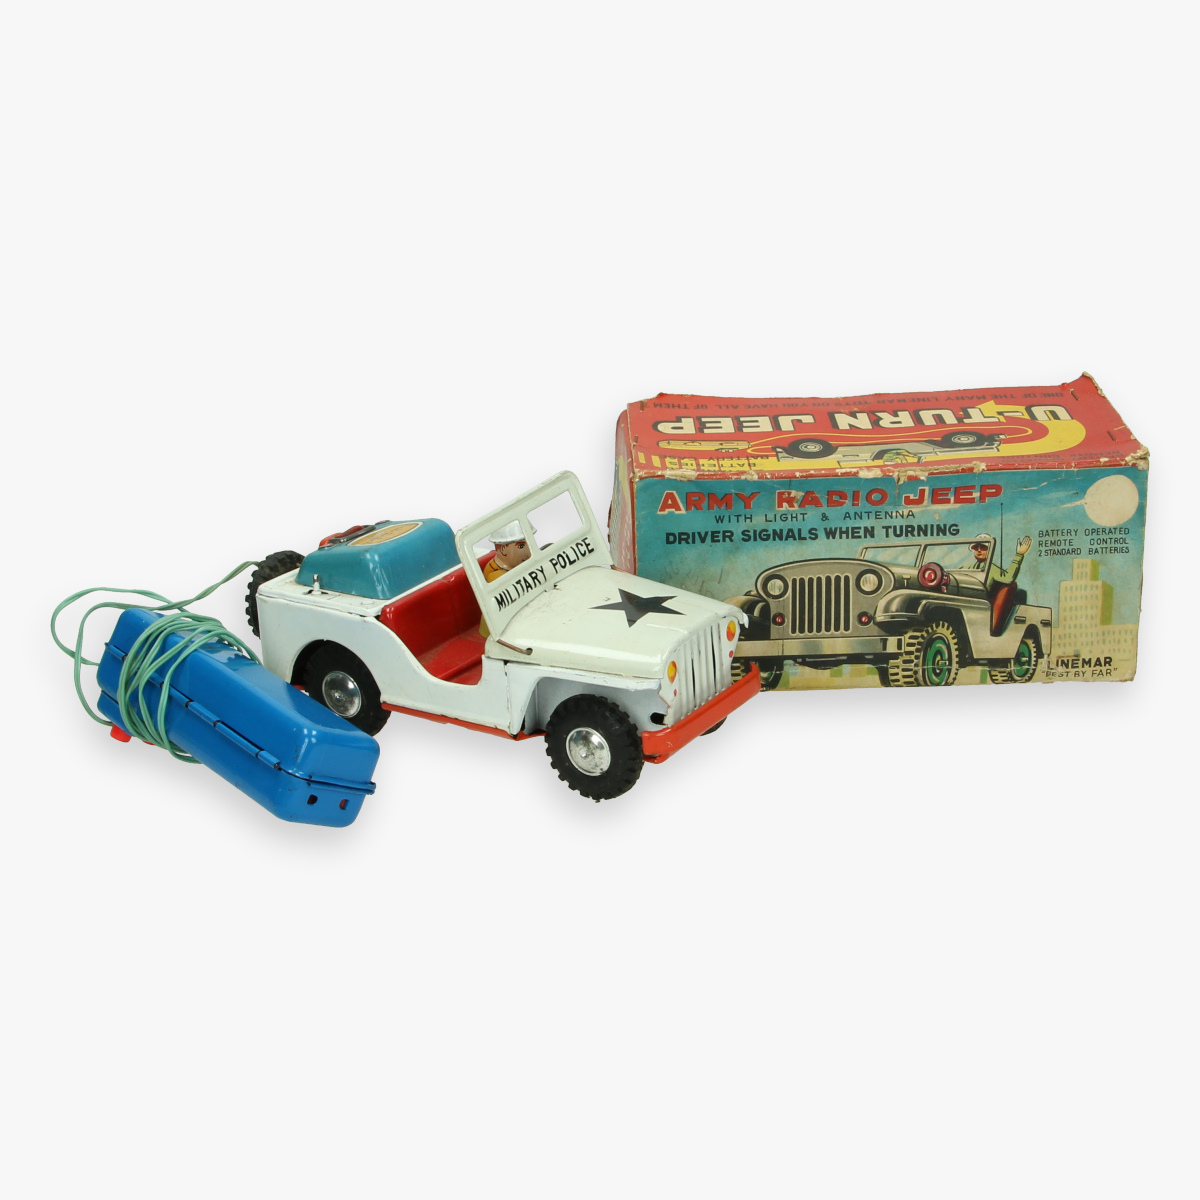 Afbeeldingen van u-turn tin toy jeep (willy's) boxed linemar trade mark